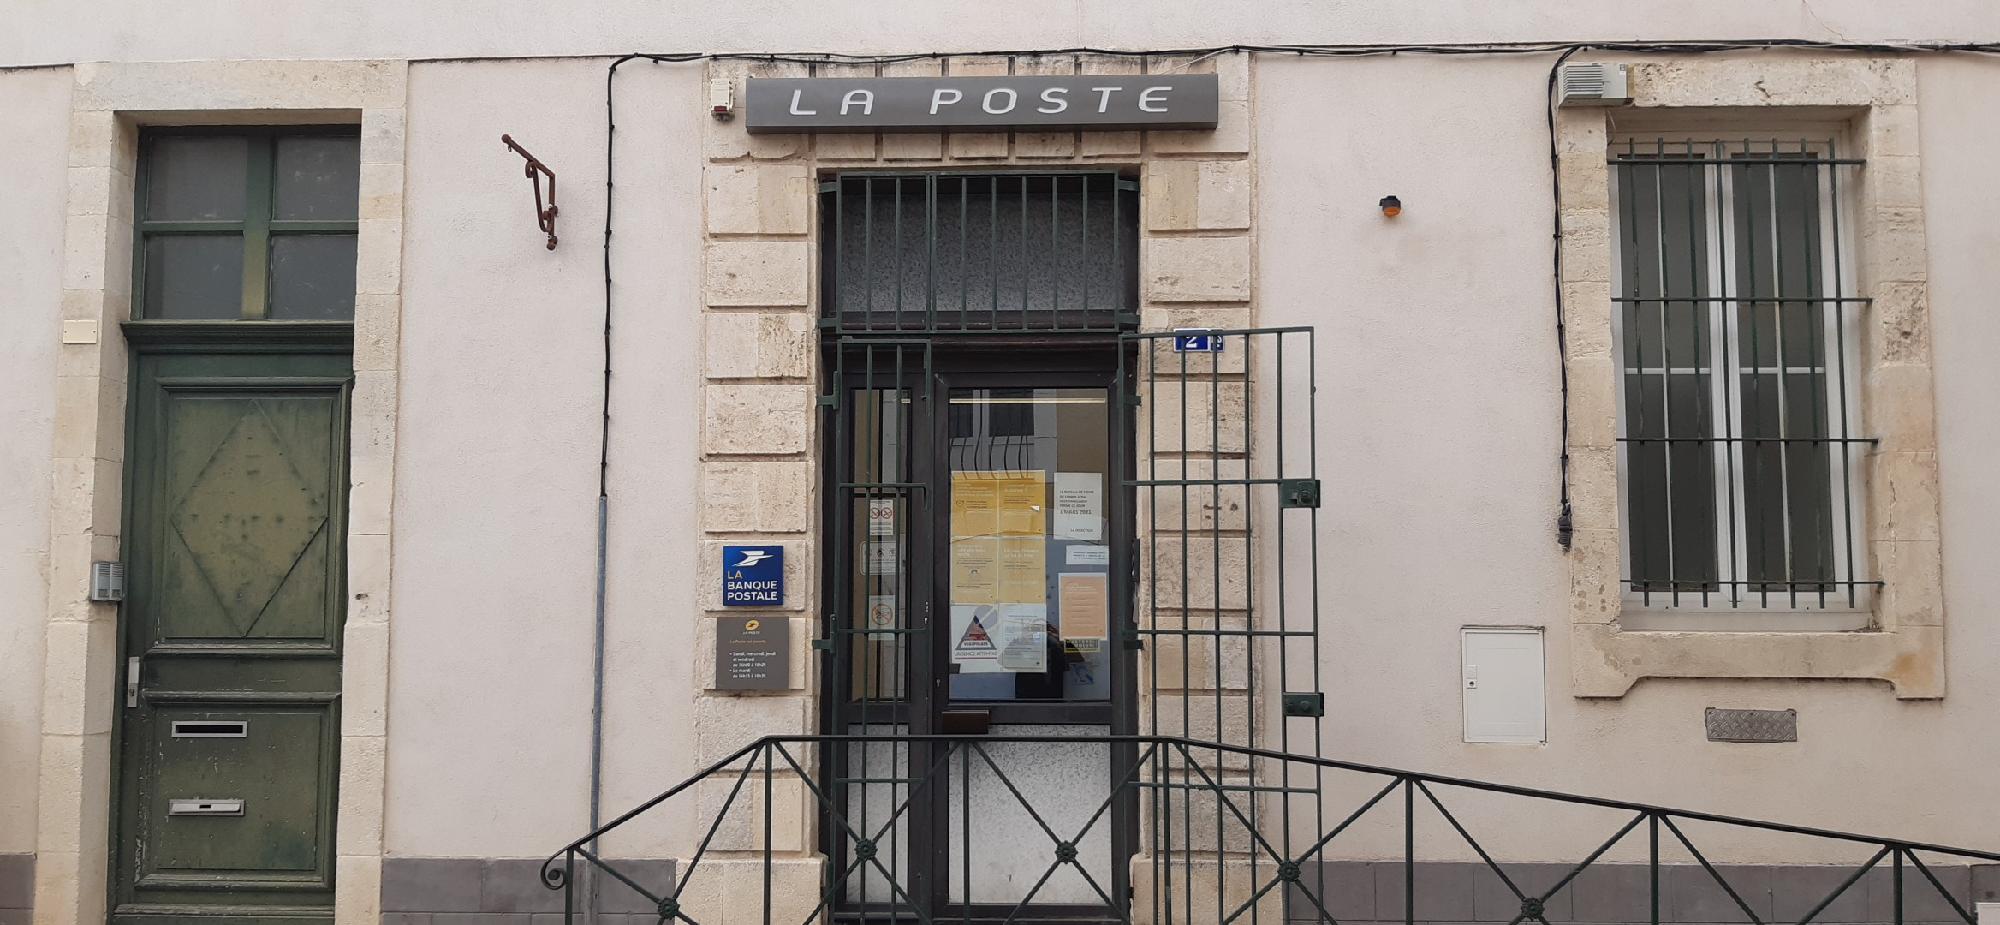 La Poste - Closed Comps